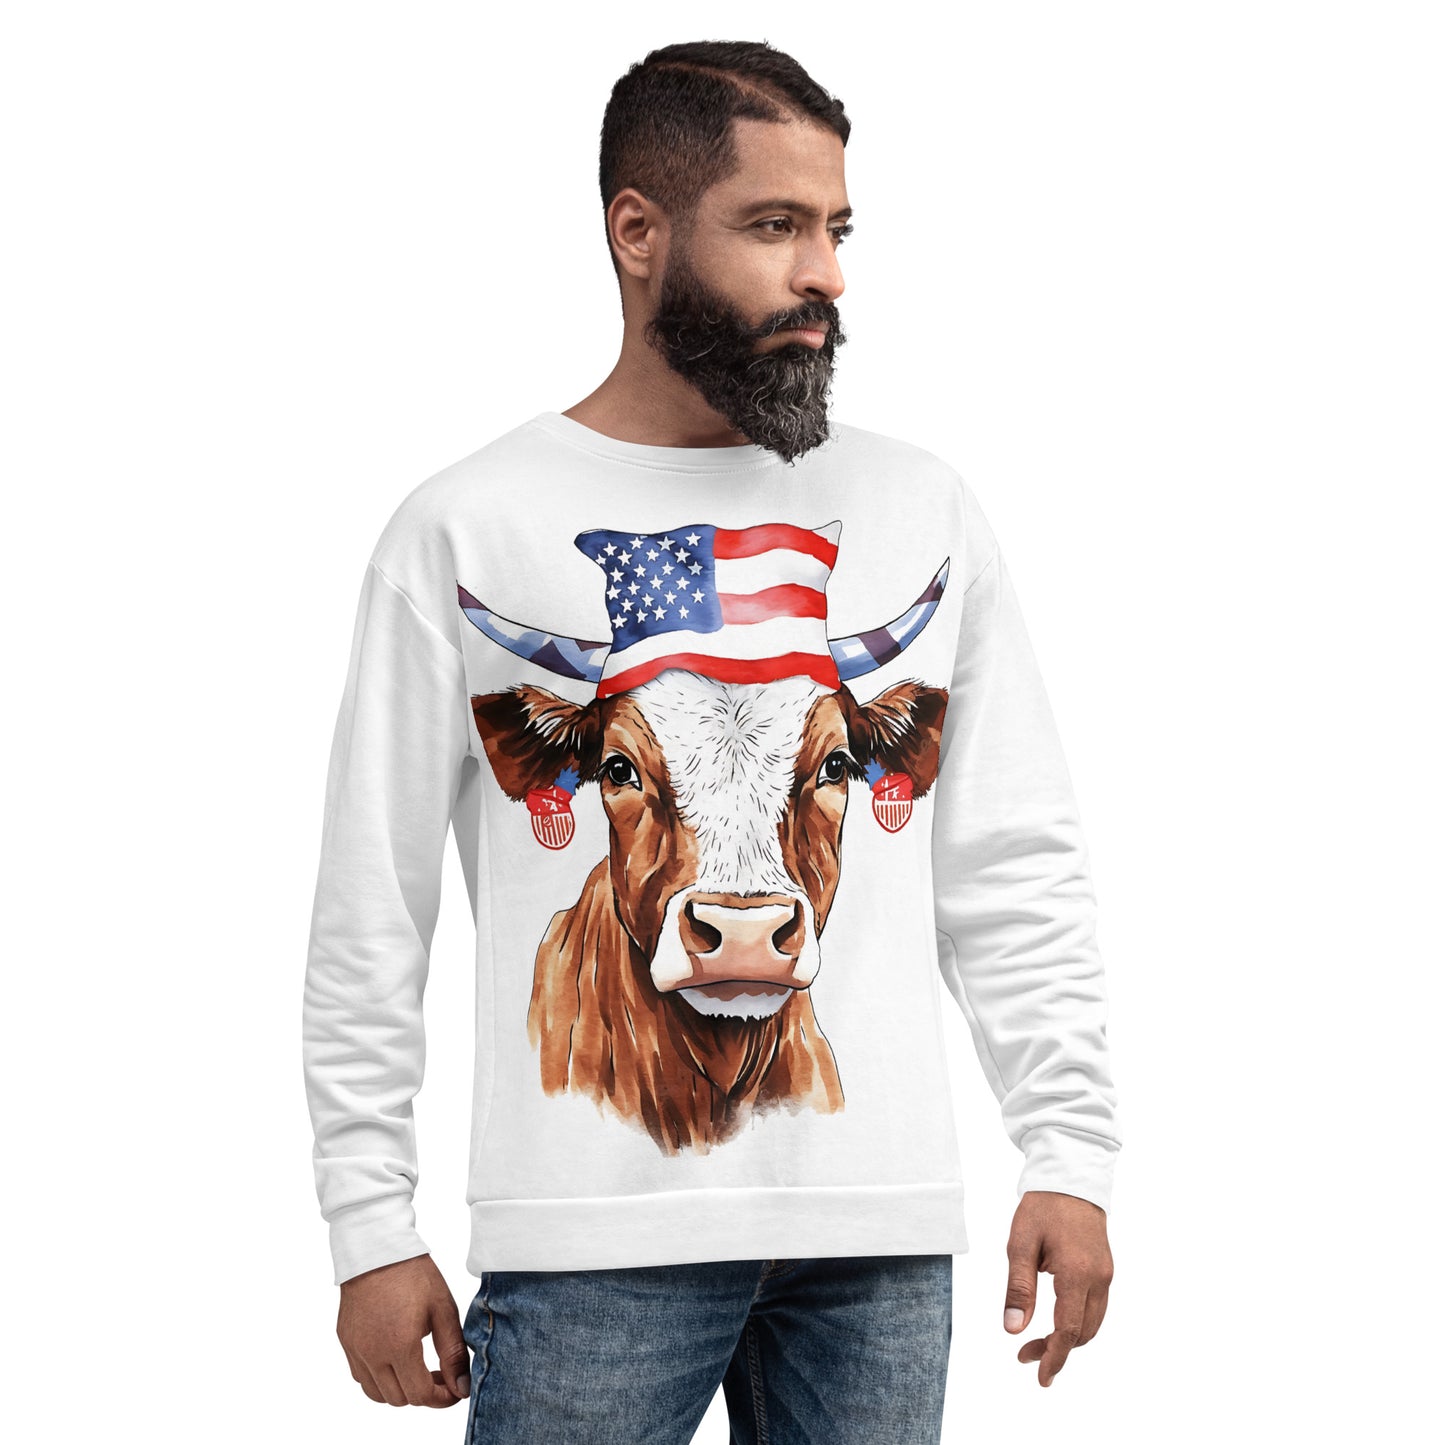 Patriotic Cow Sweatshirt For Animal Lover